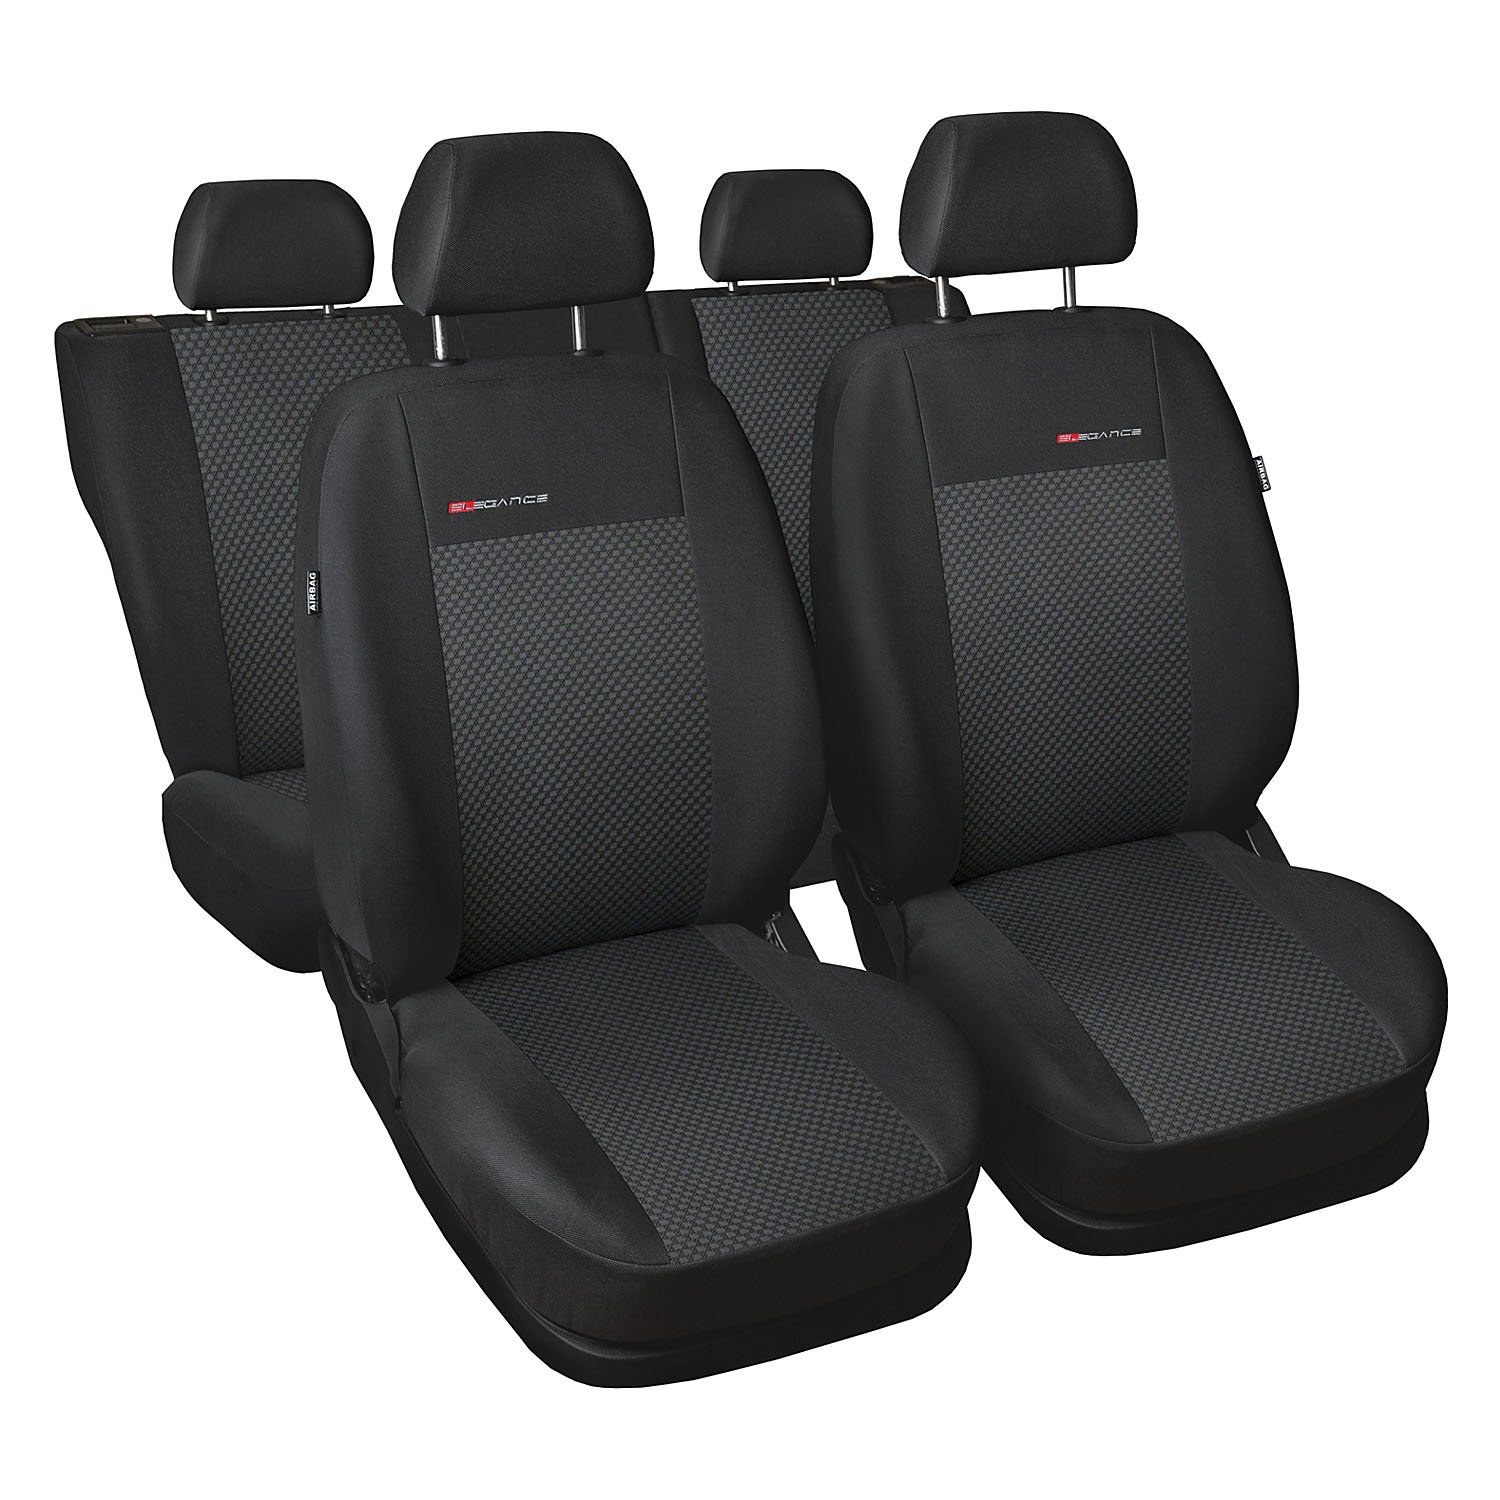 speedszop Universal Sitzbezug Sitzbezüge Schonbezüge kompatibel mit Audi A4 B7 von speedszop